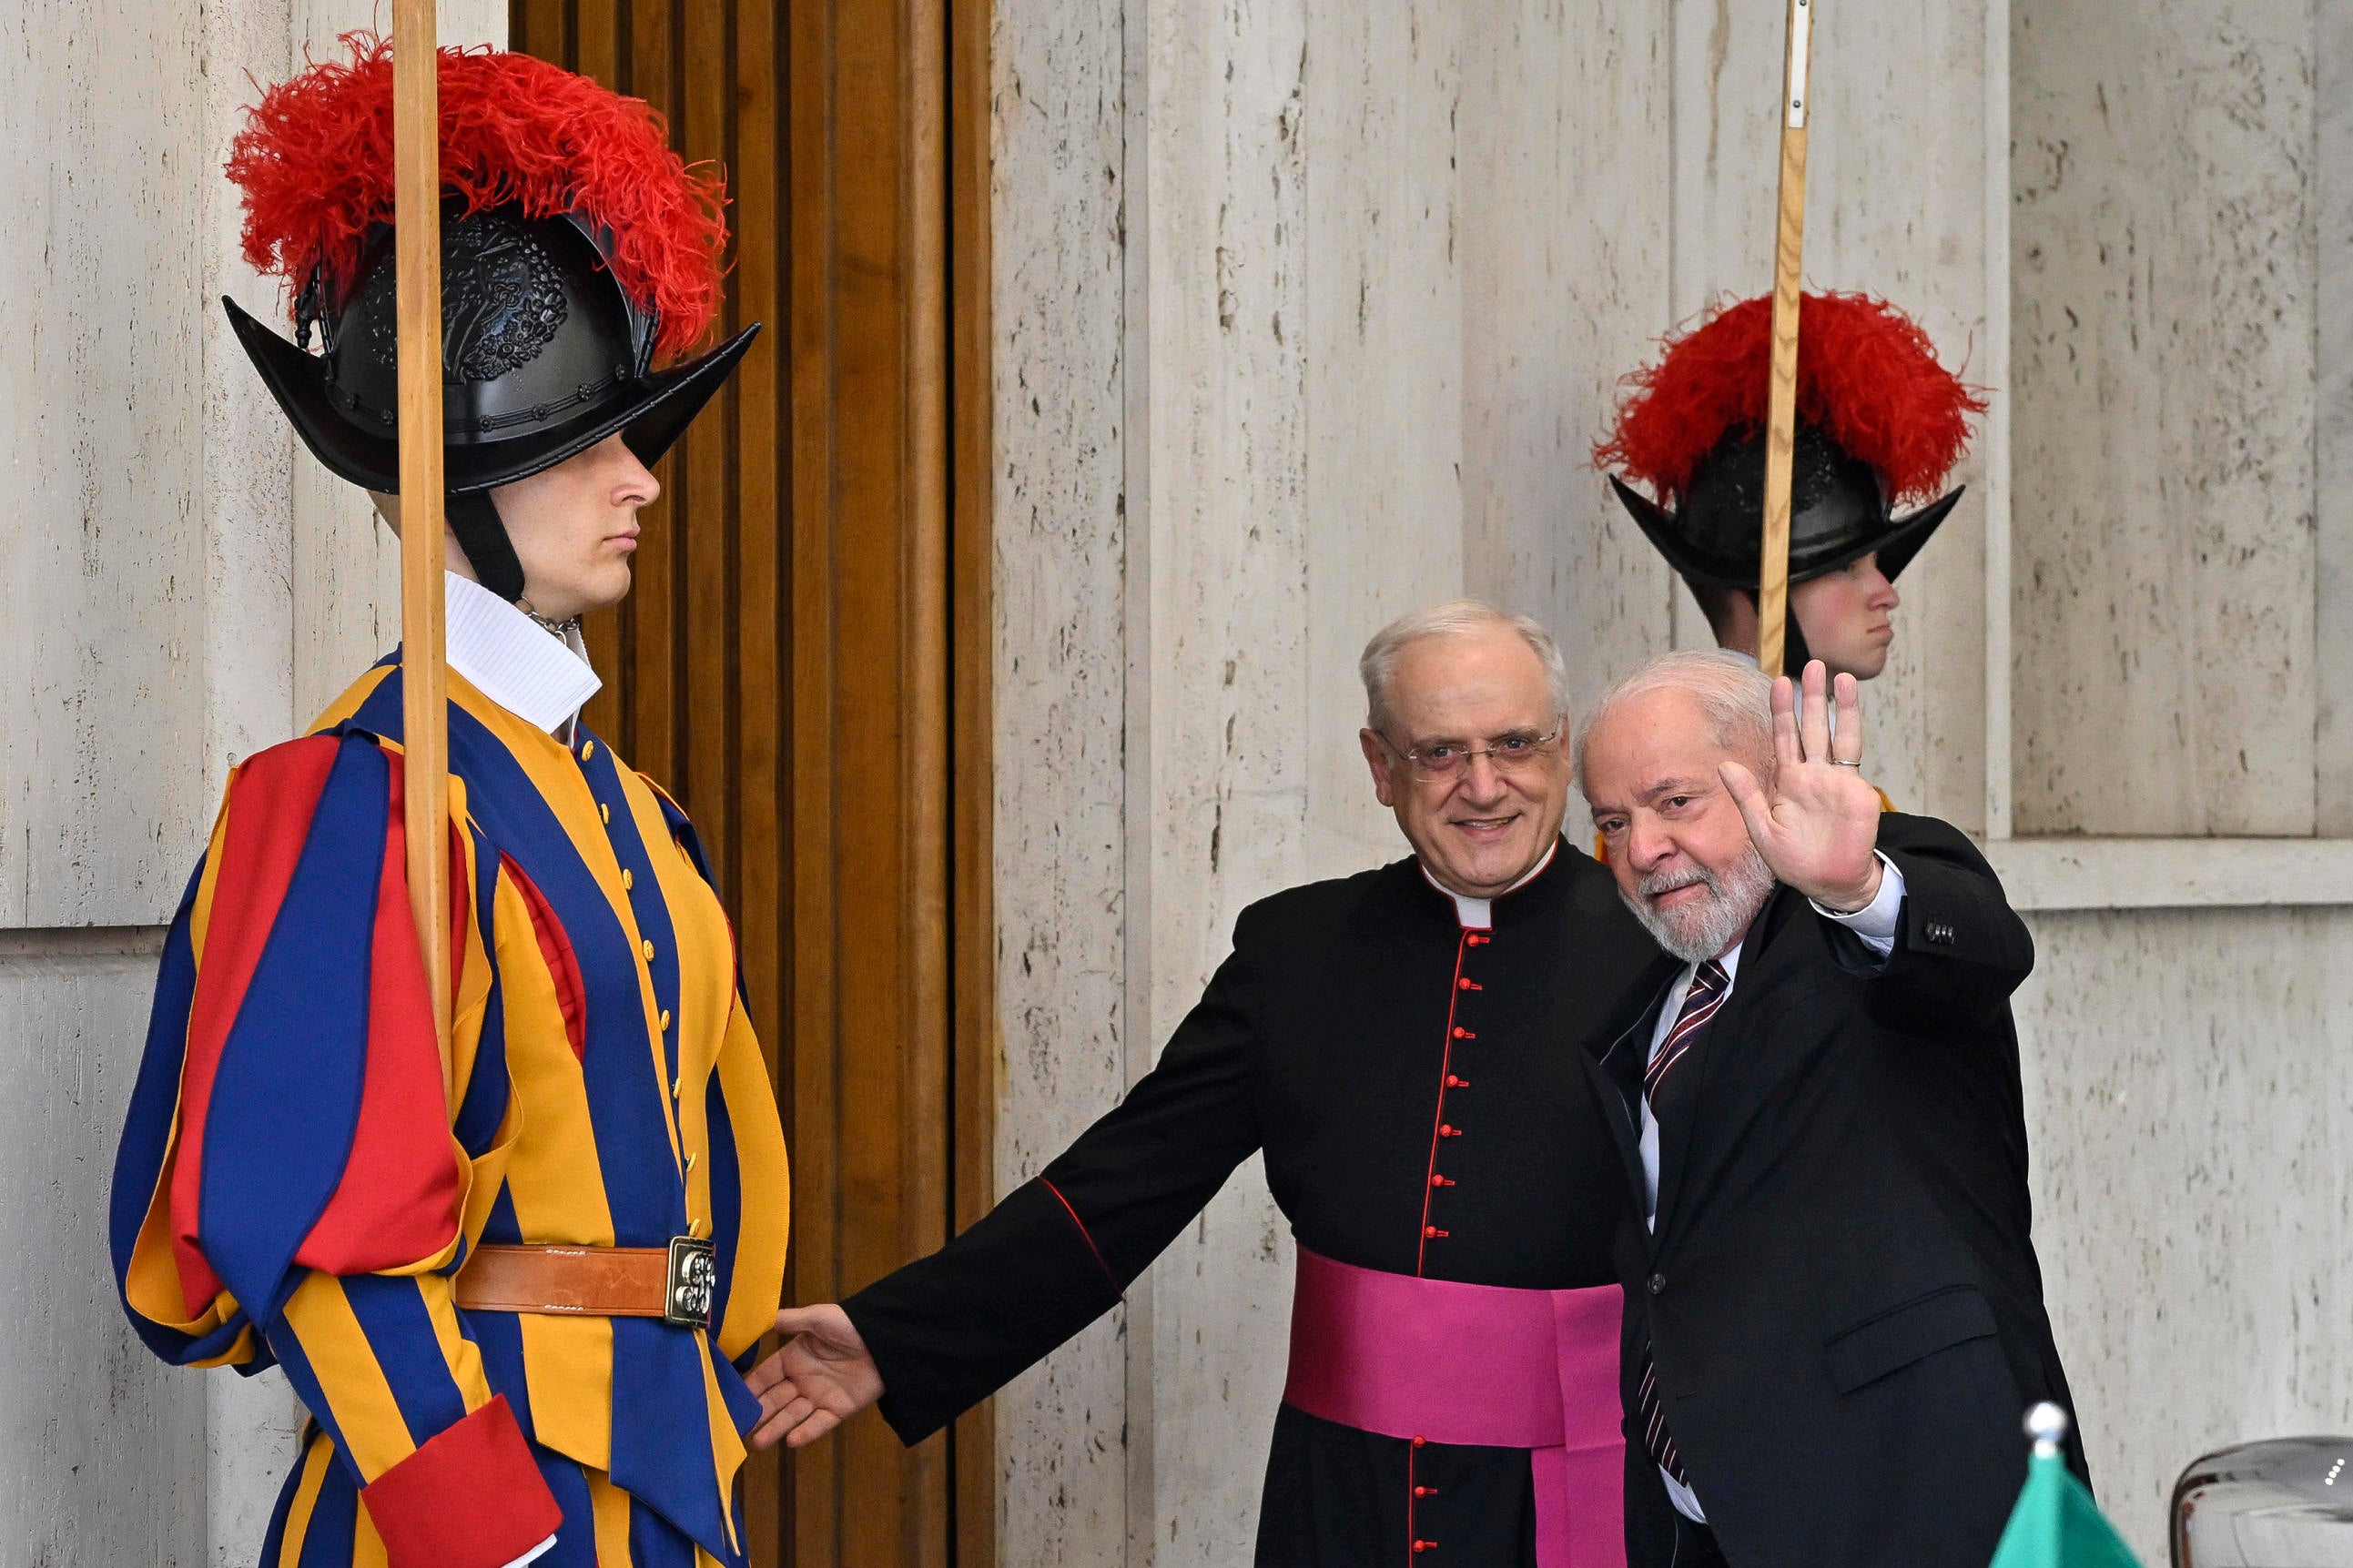 Brazilian President Luiz Inacio Lula da Silva was granted a private sudience with Pope Francis this week